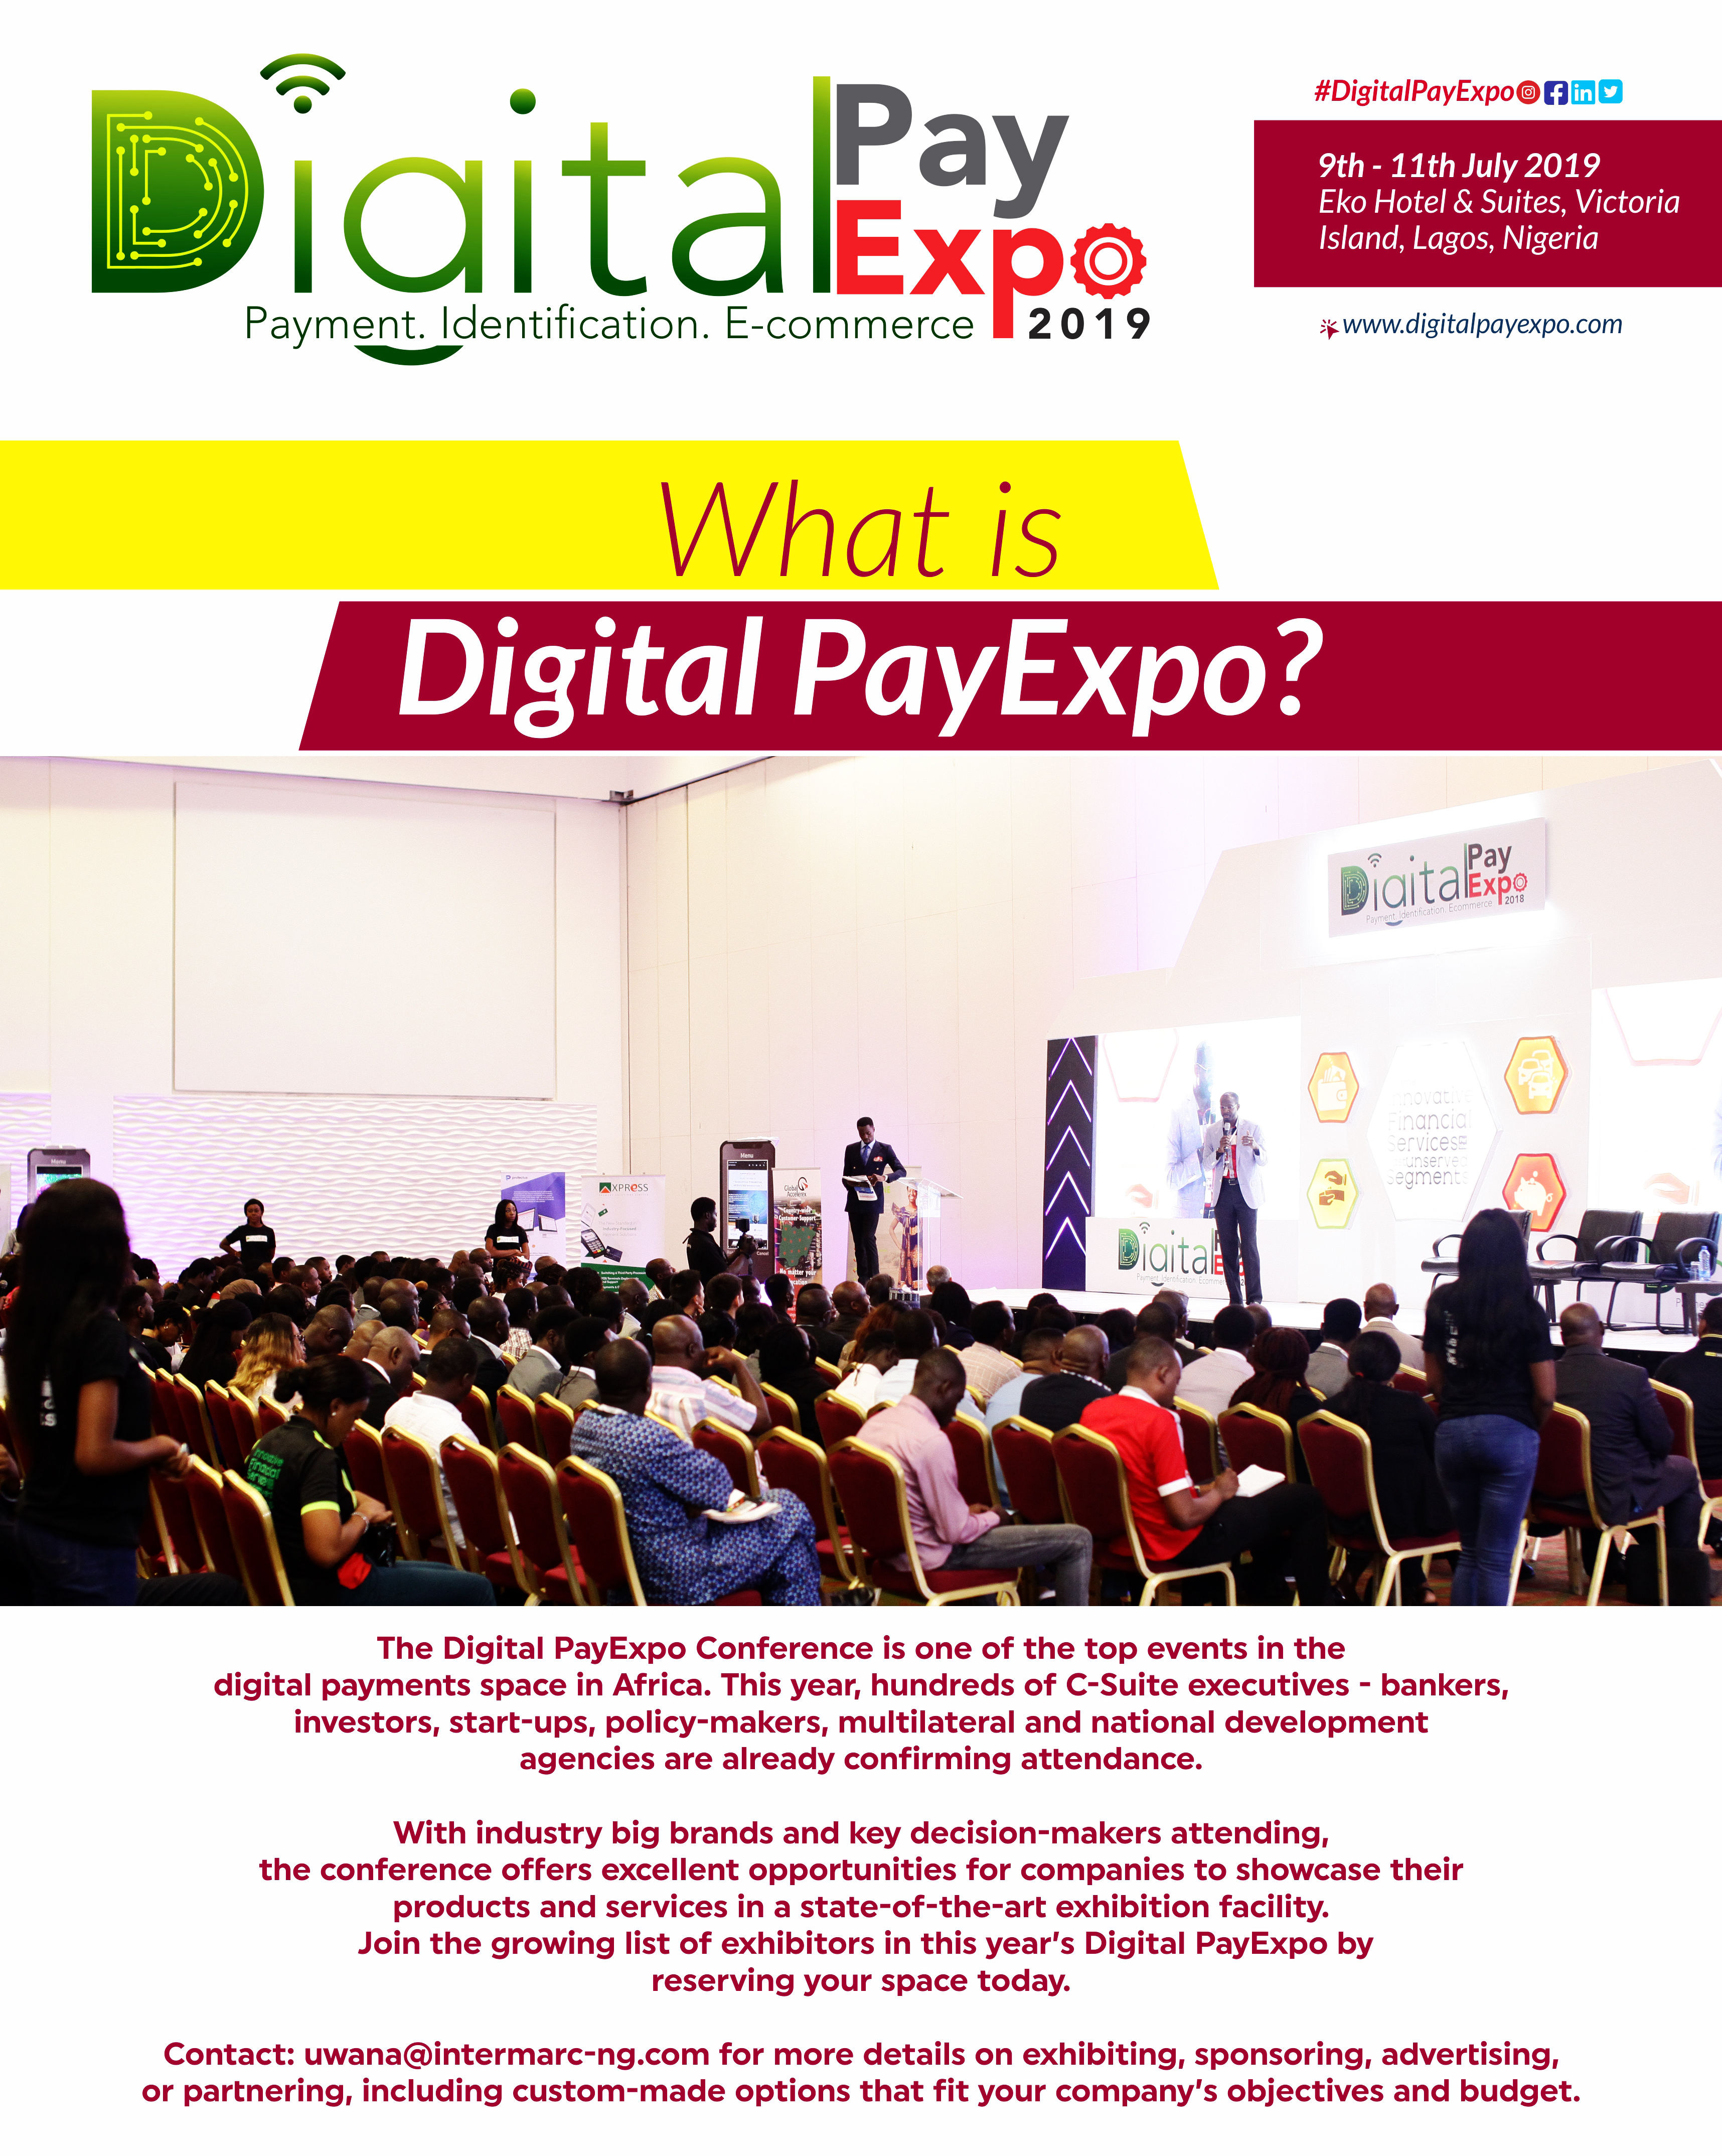 Digital PayExpo 2019